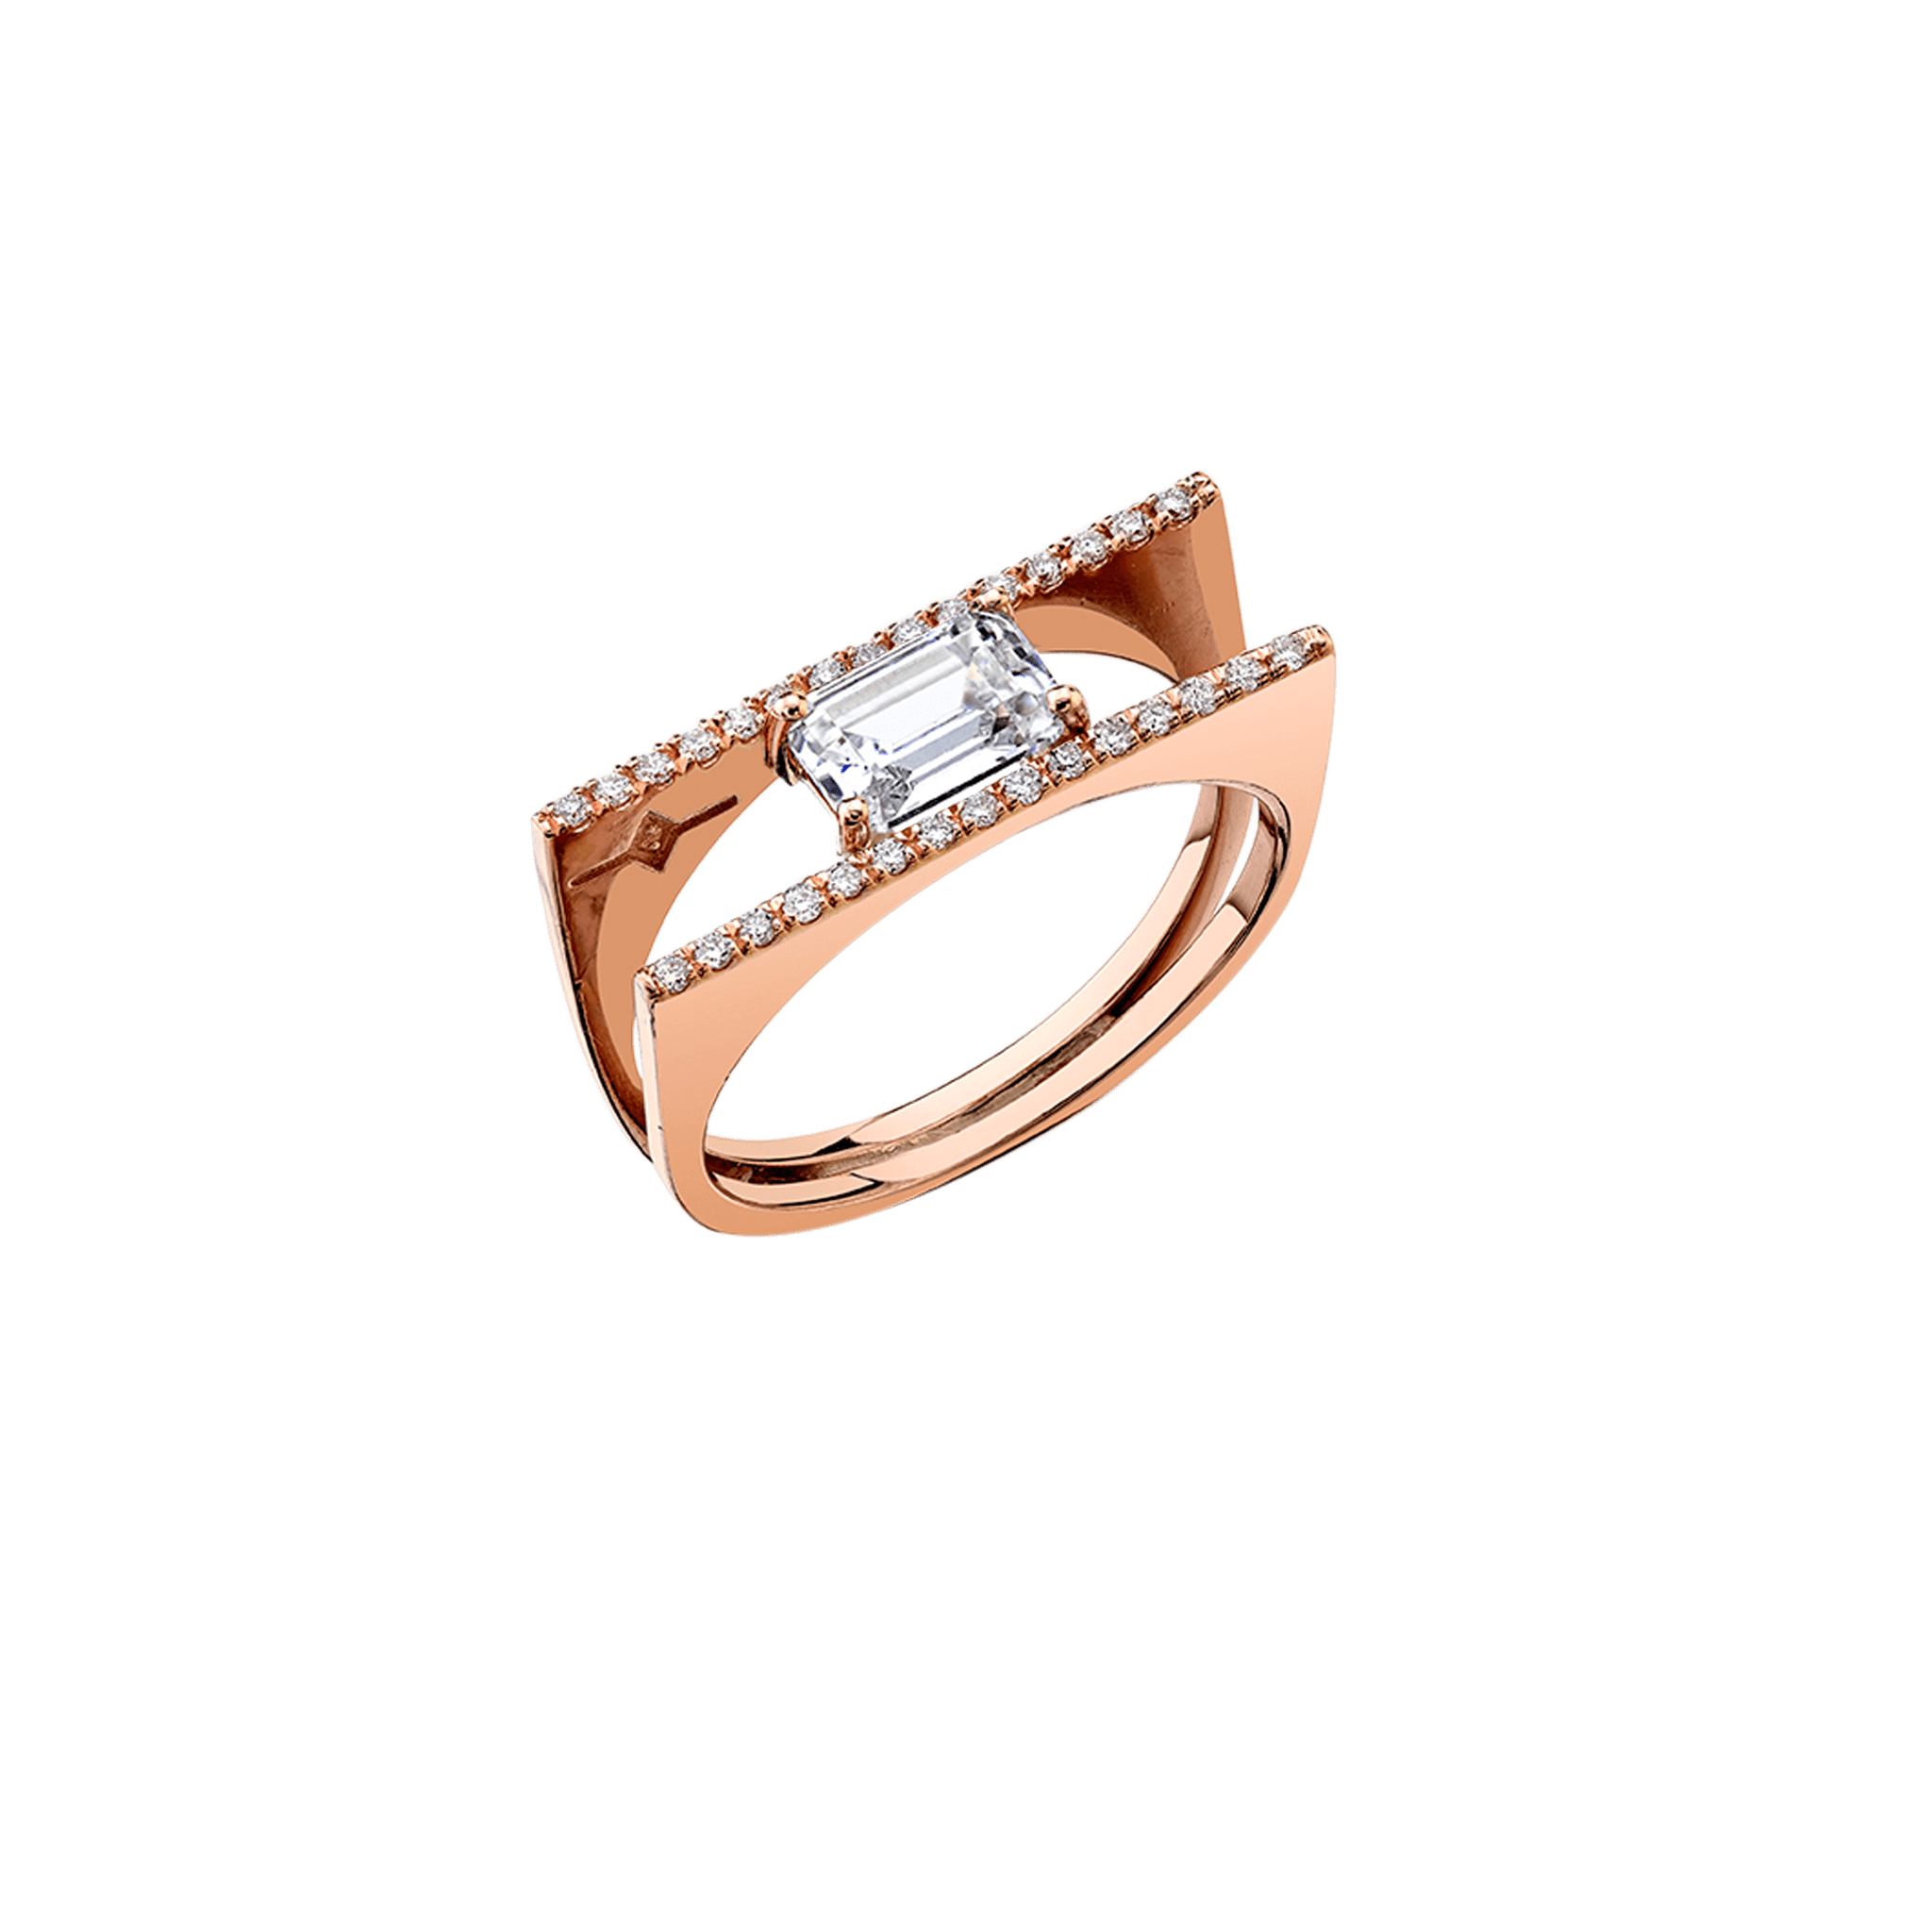 Dual Axis Ring with Emerald Cut Diamond - Gabriela Artigas